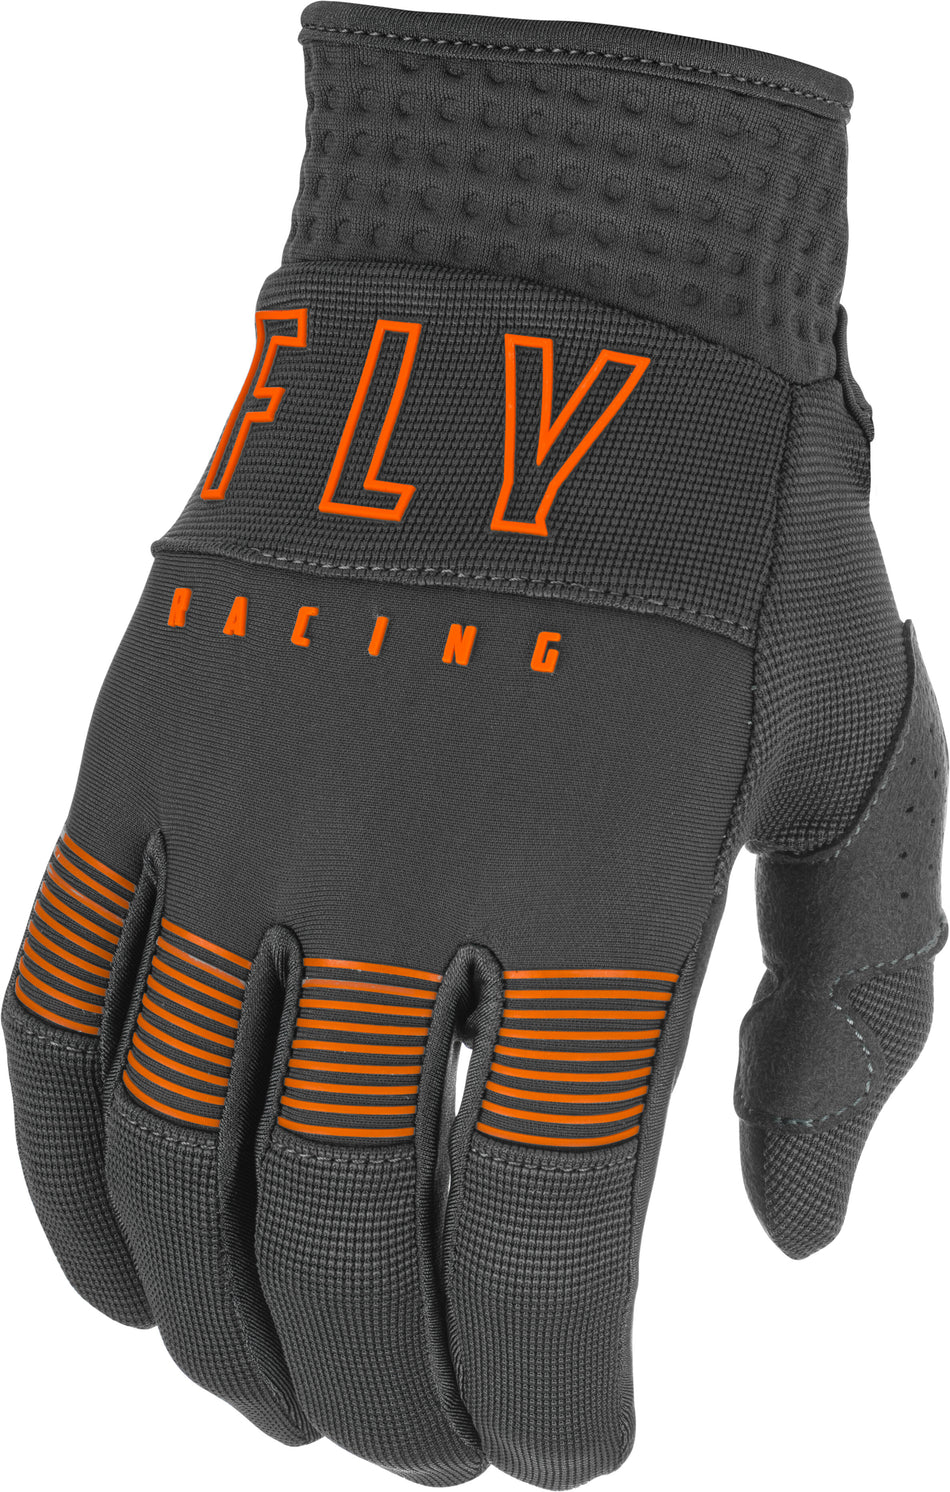 FLY RACING Youth F-16 Gloves Grey/Orange Sz 05 374-91605